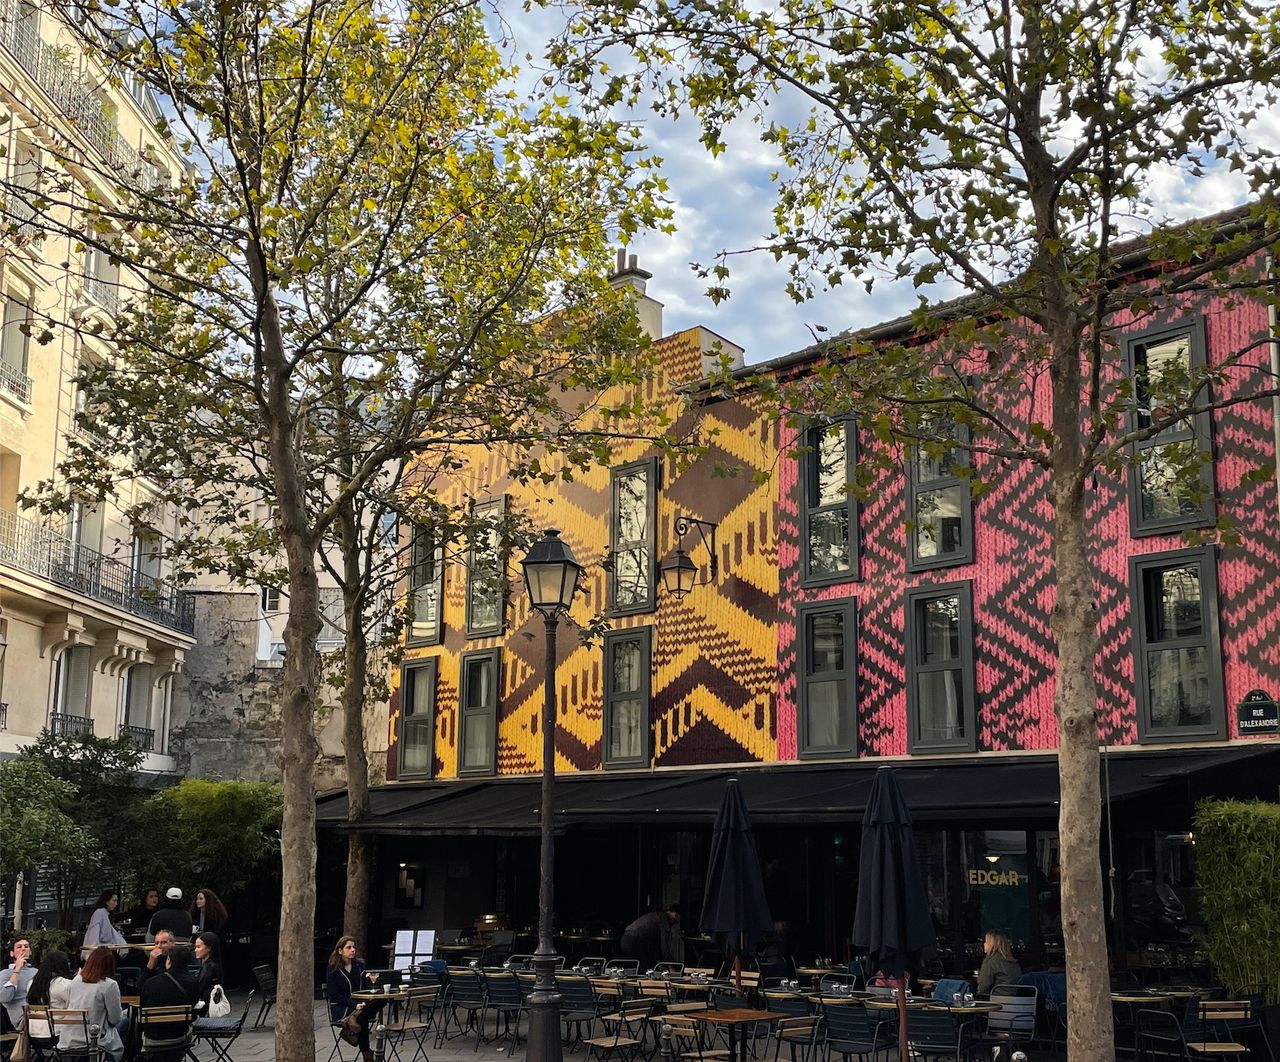 Prada Takes Over Small Paris Square for its F/W 2021 Campaign